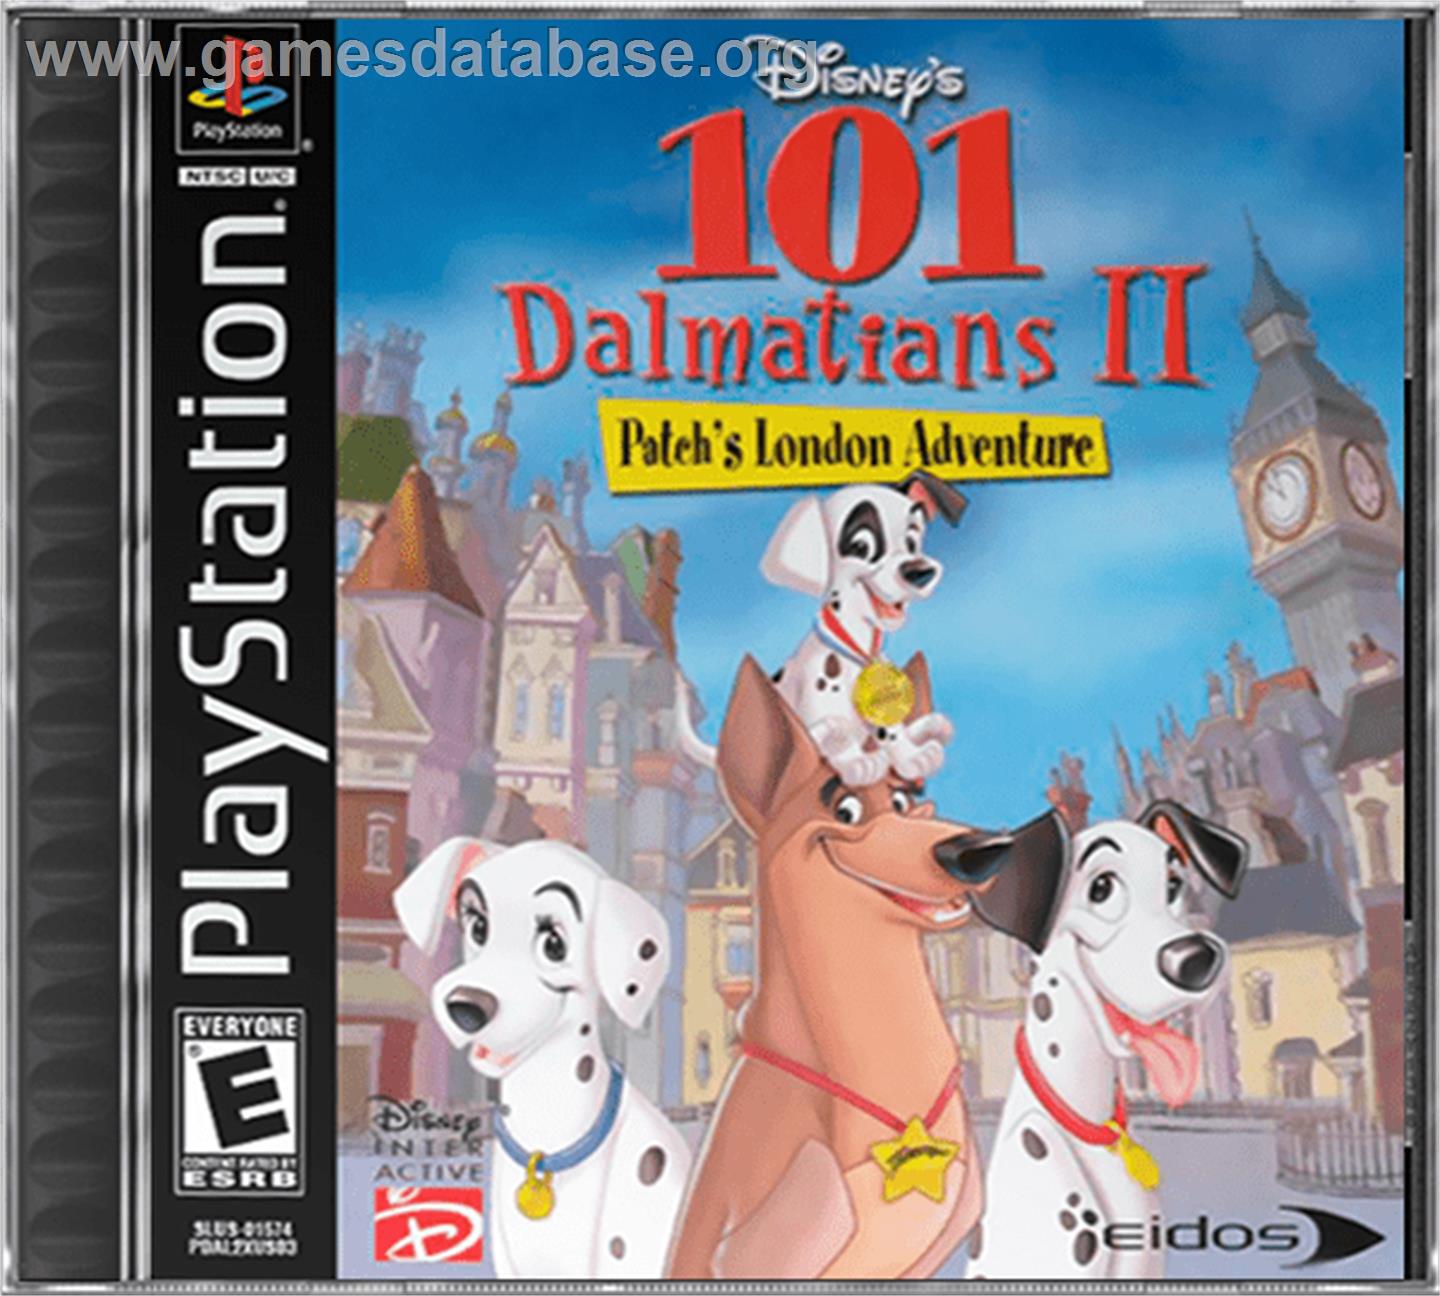 Disney's 101 Dalmatians II: Patch's London Adventure - Sony Playstation - Artwork - Box